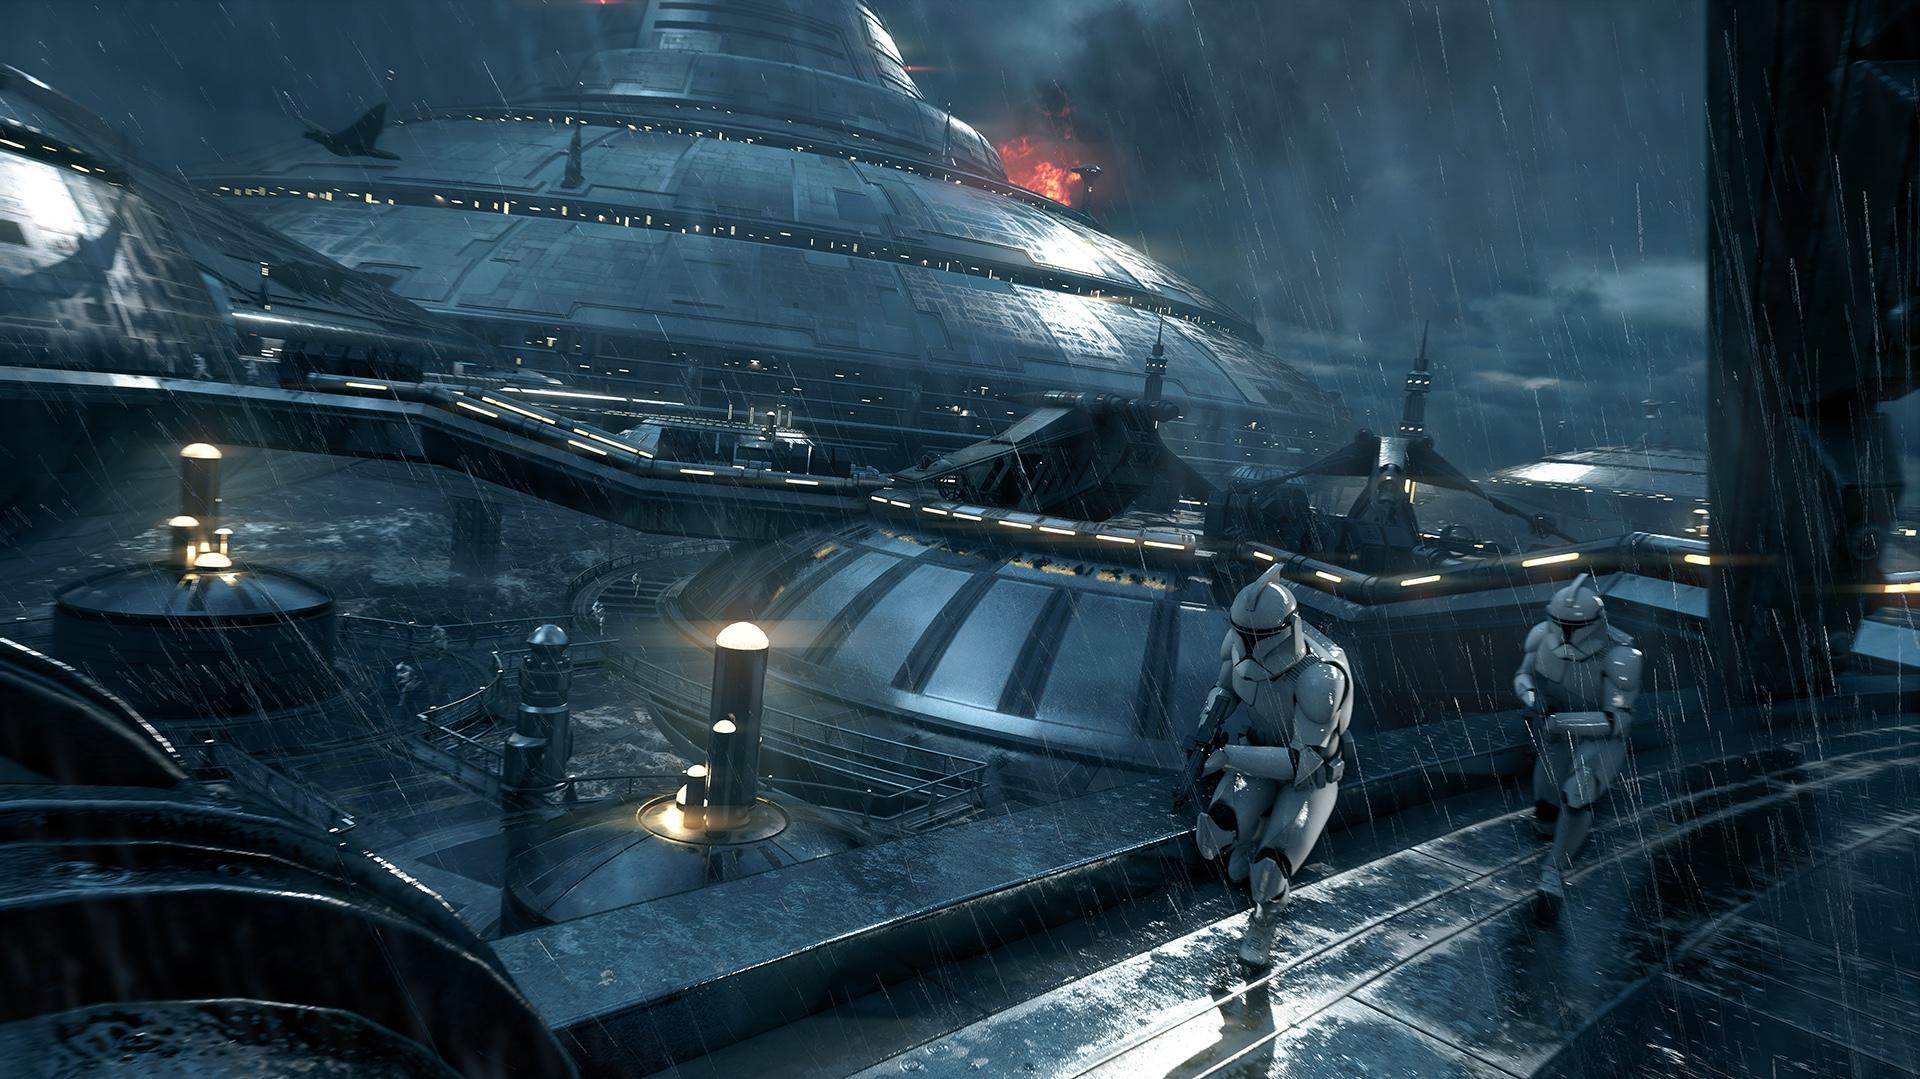 Science Fiction Gloomy Storm Spaceship Star Wars